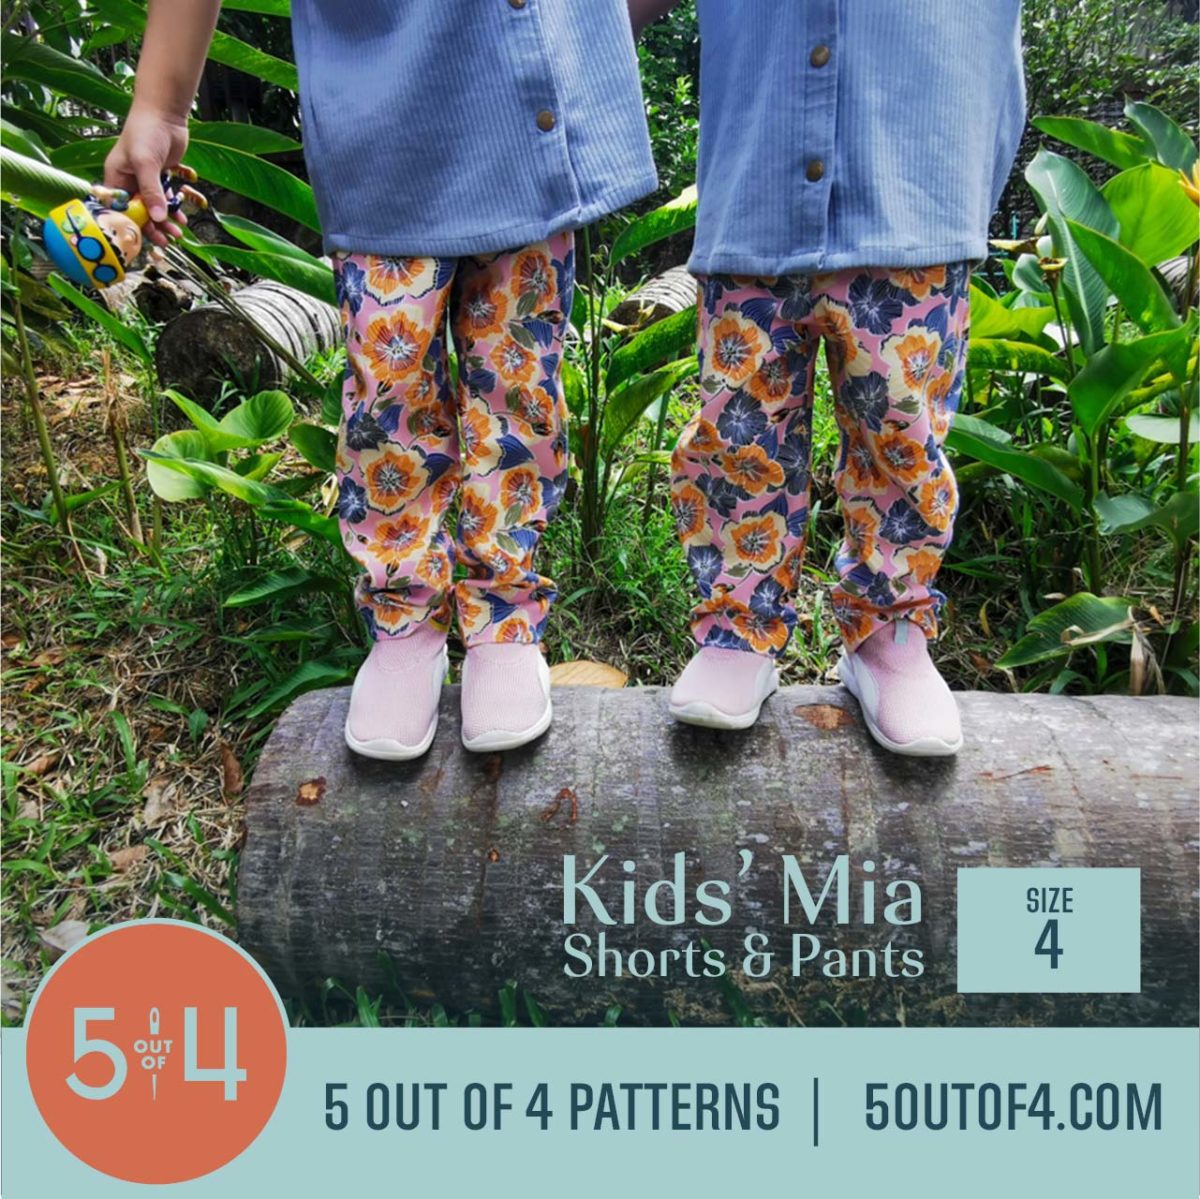 5oo4 Patterns Kids' Mia Pants Size 4